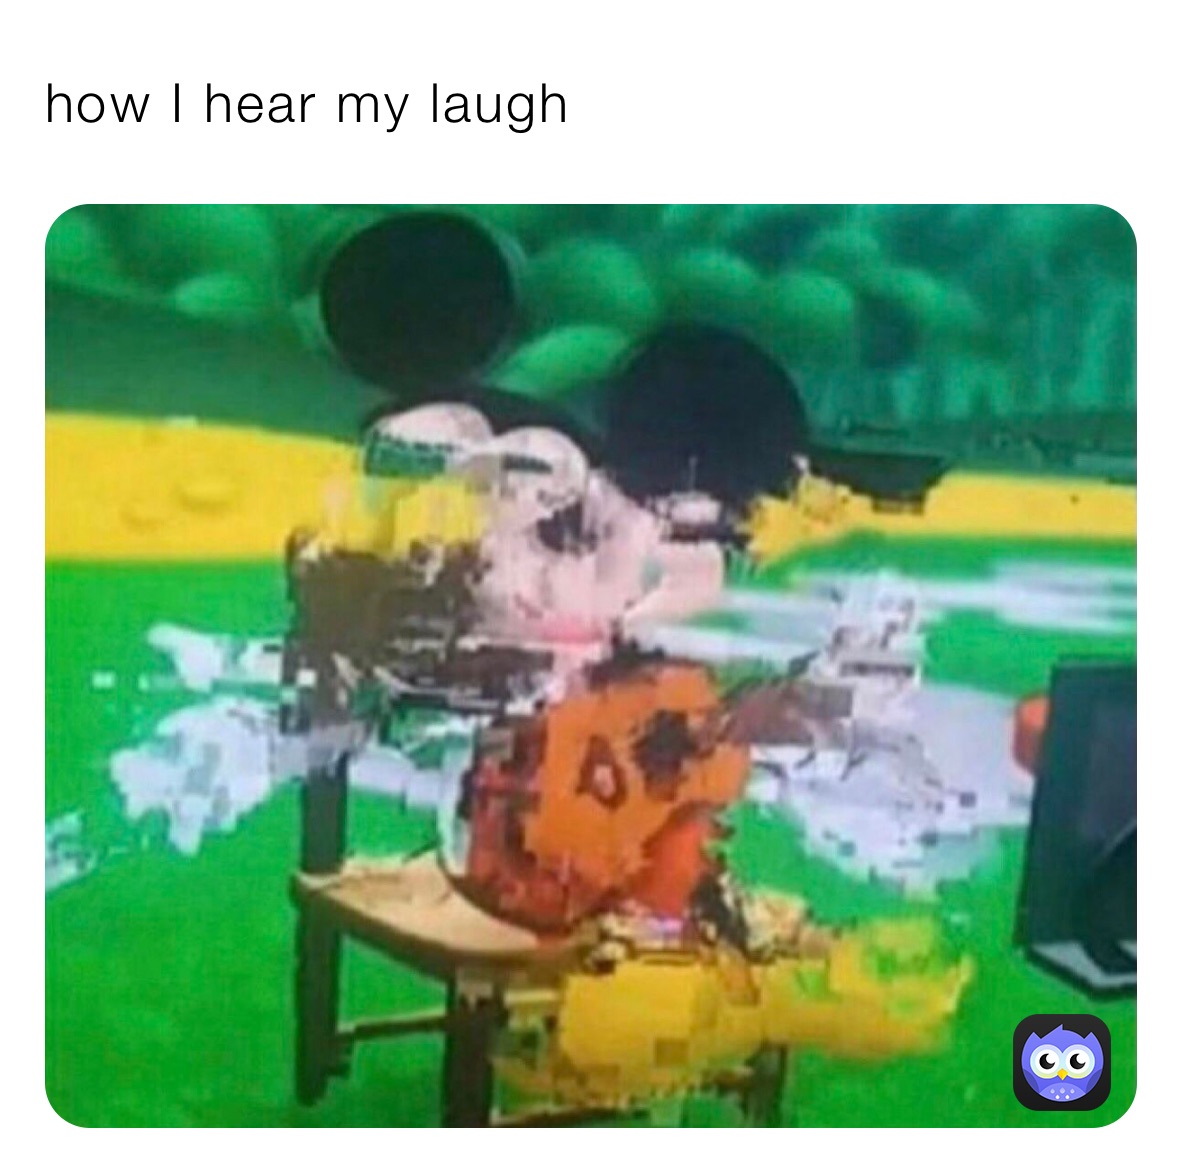 how I hear my laugh